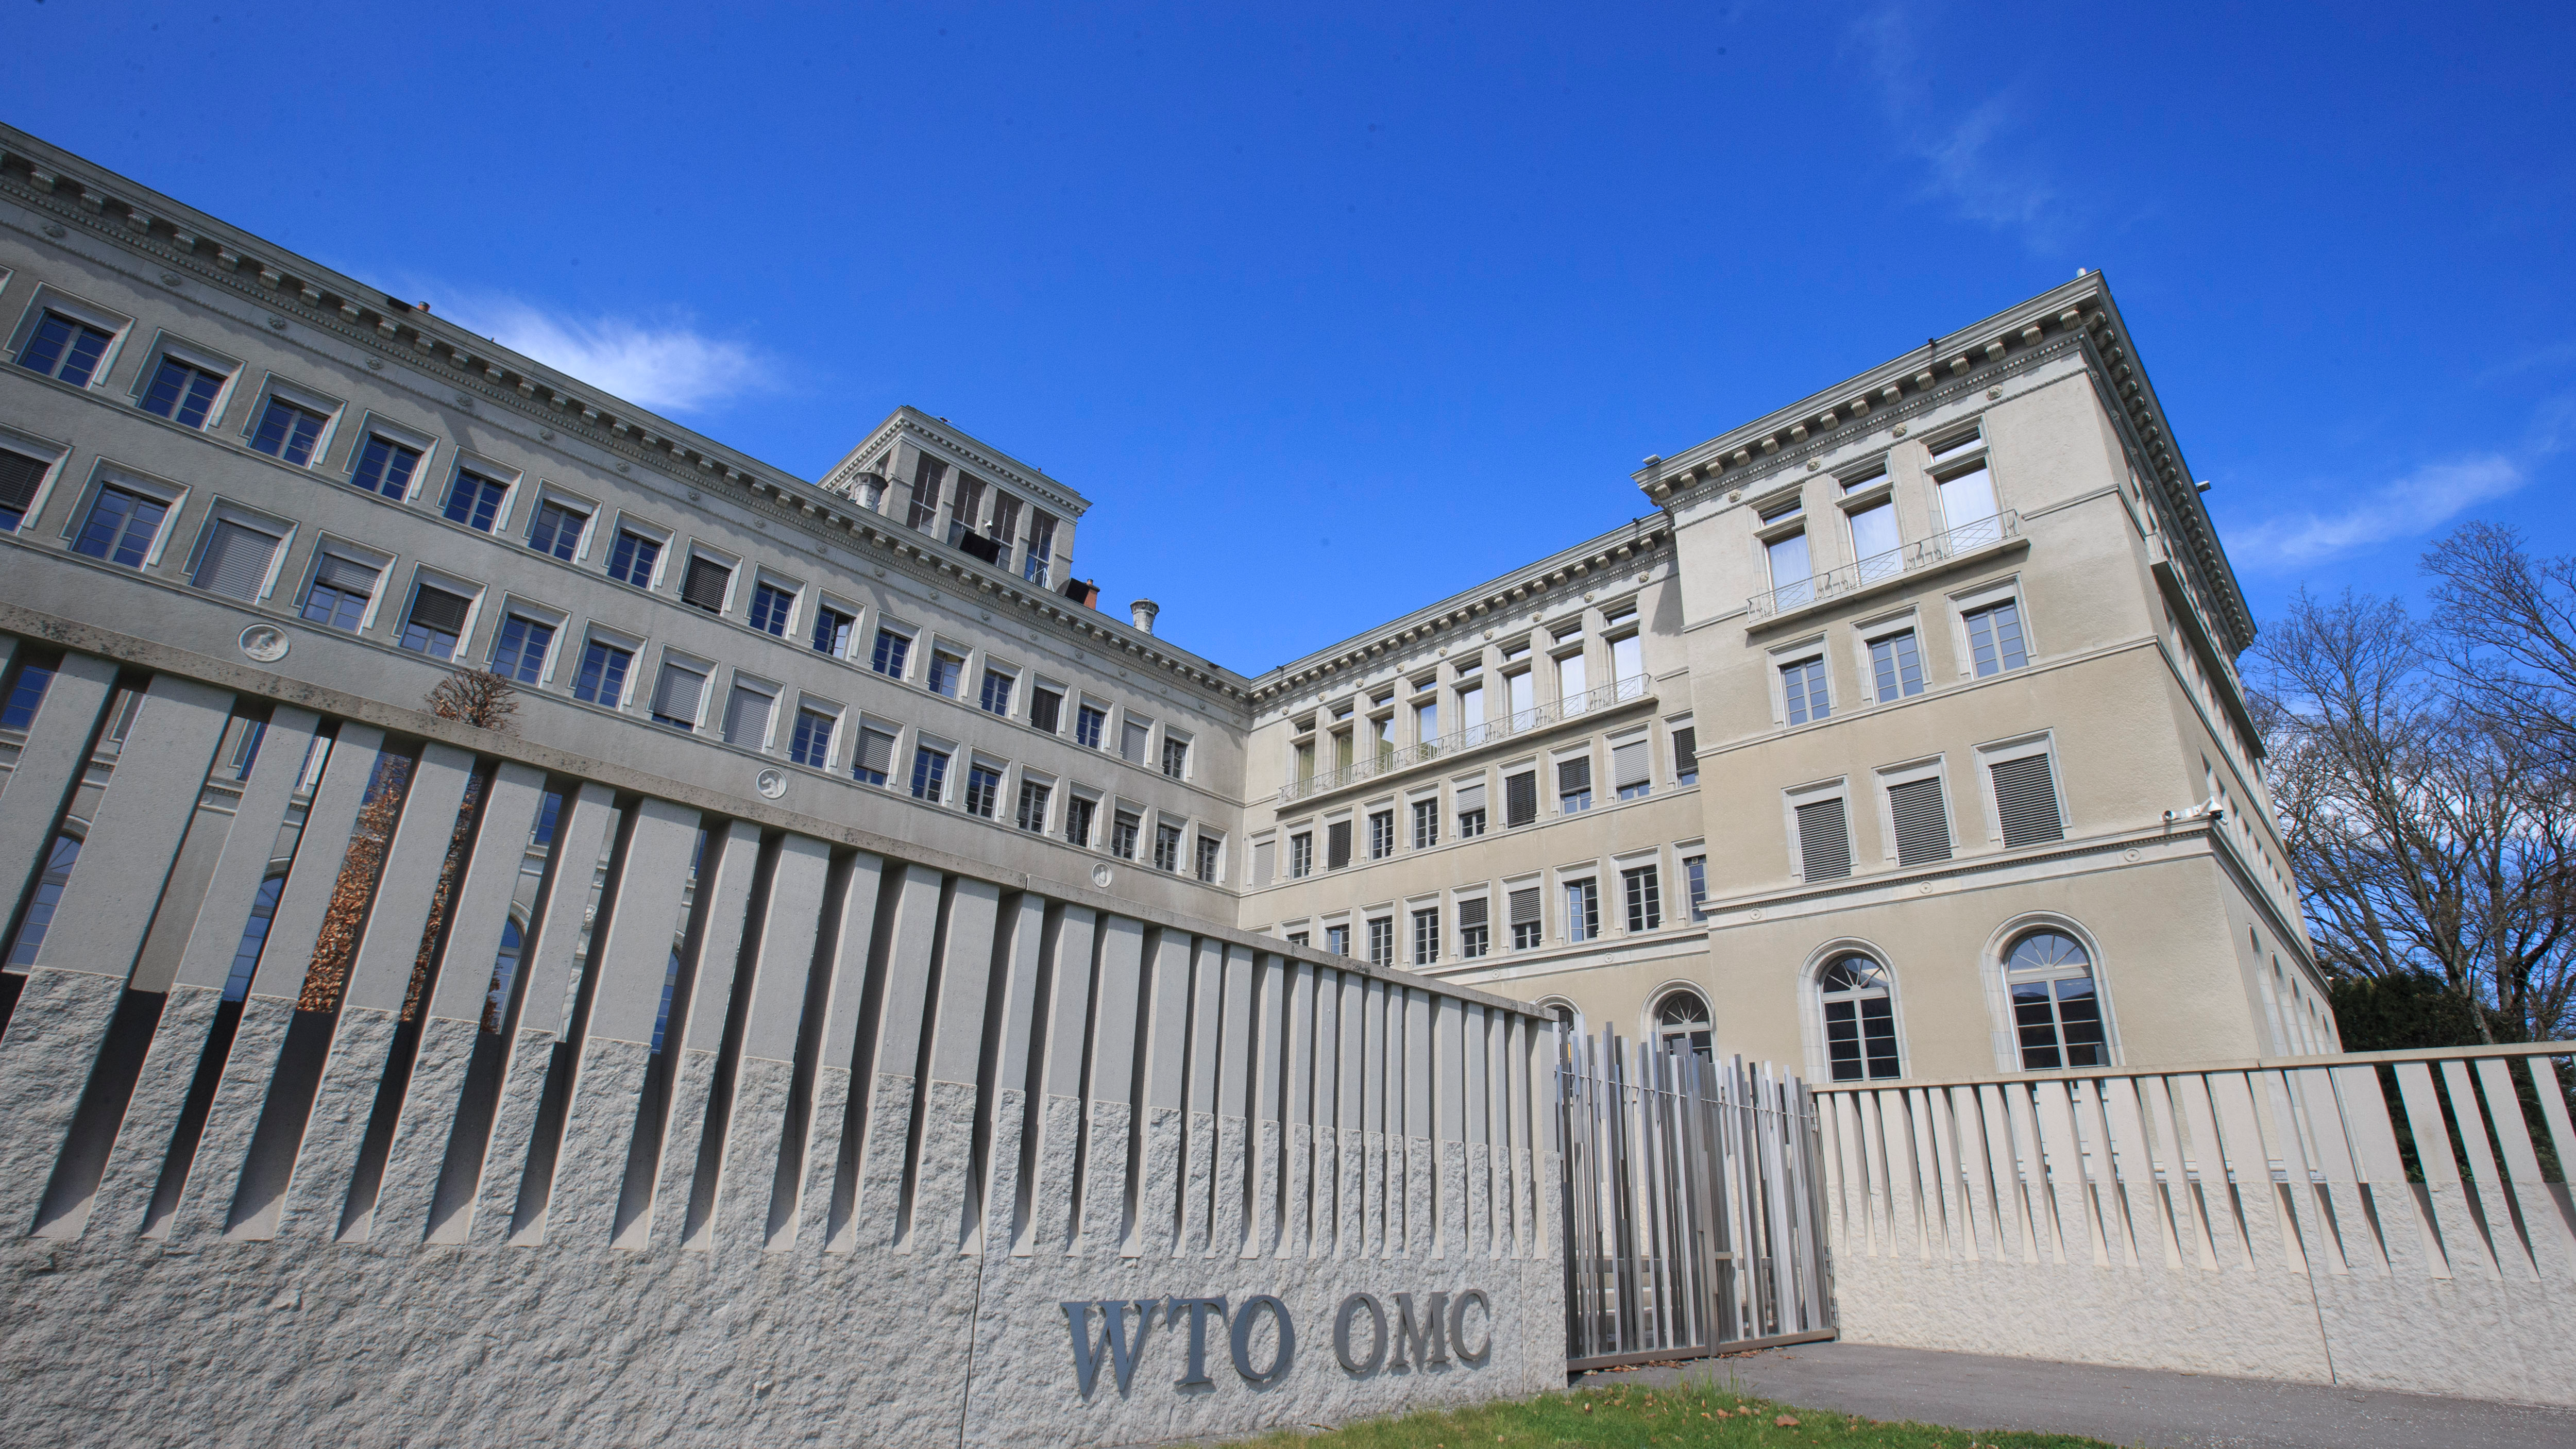 The World Trade Organization headquarters in Geneva, Switzerland. /Xinhua